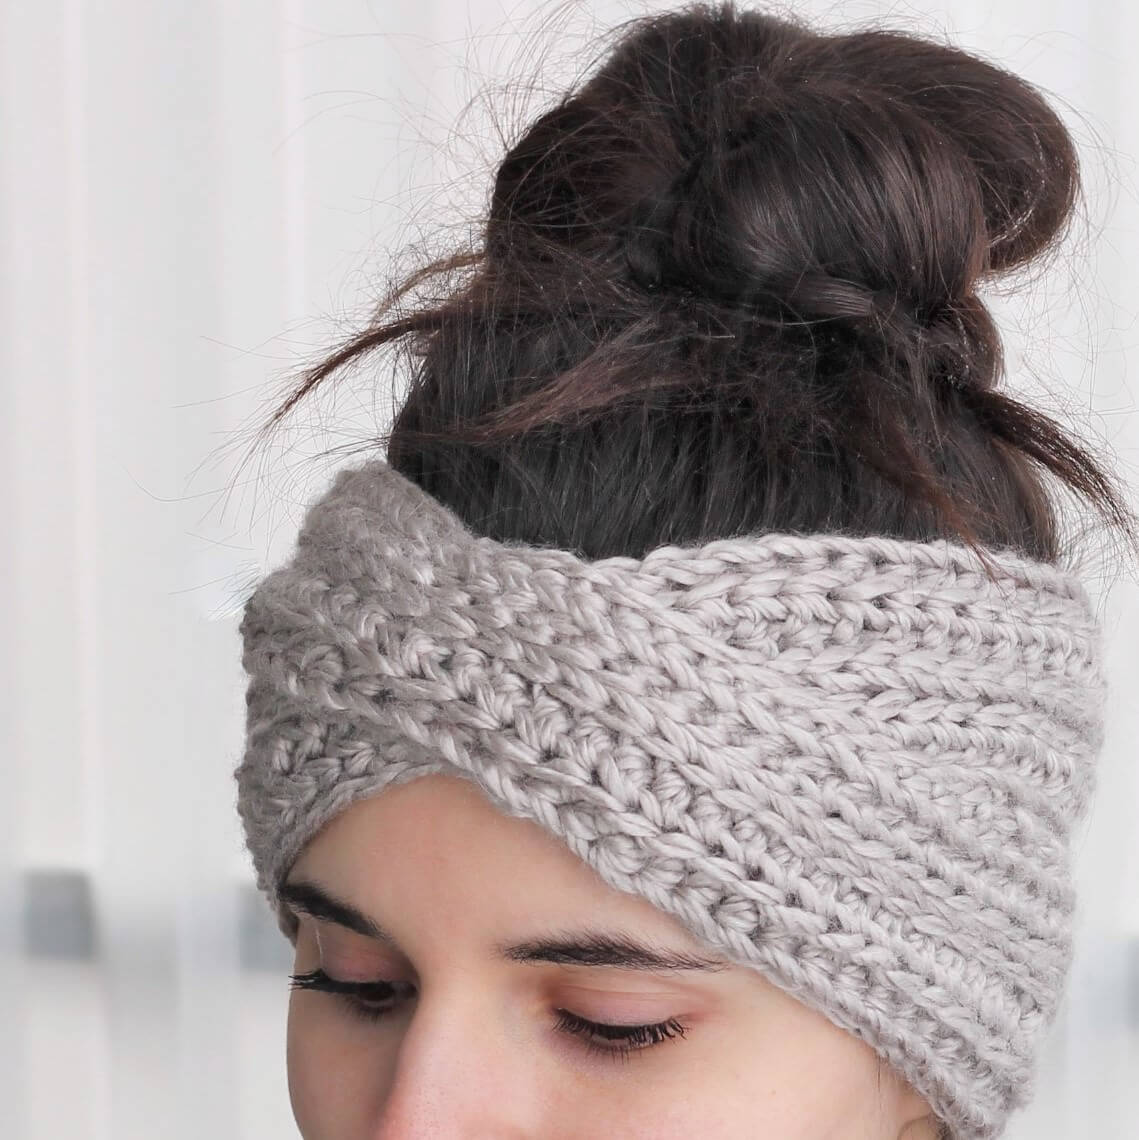 TYRA Headband - Crochet Pattern - The Easy Design